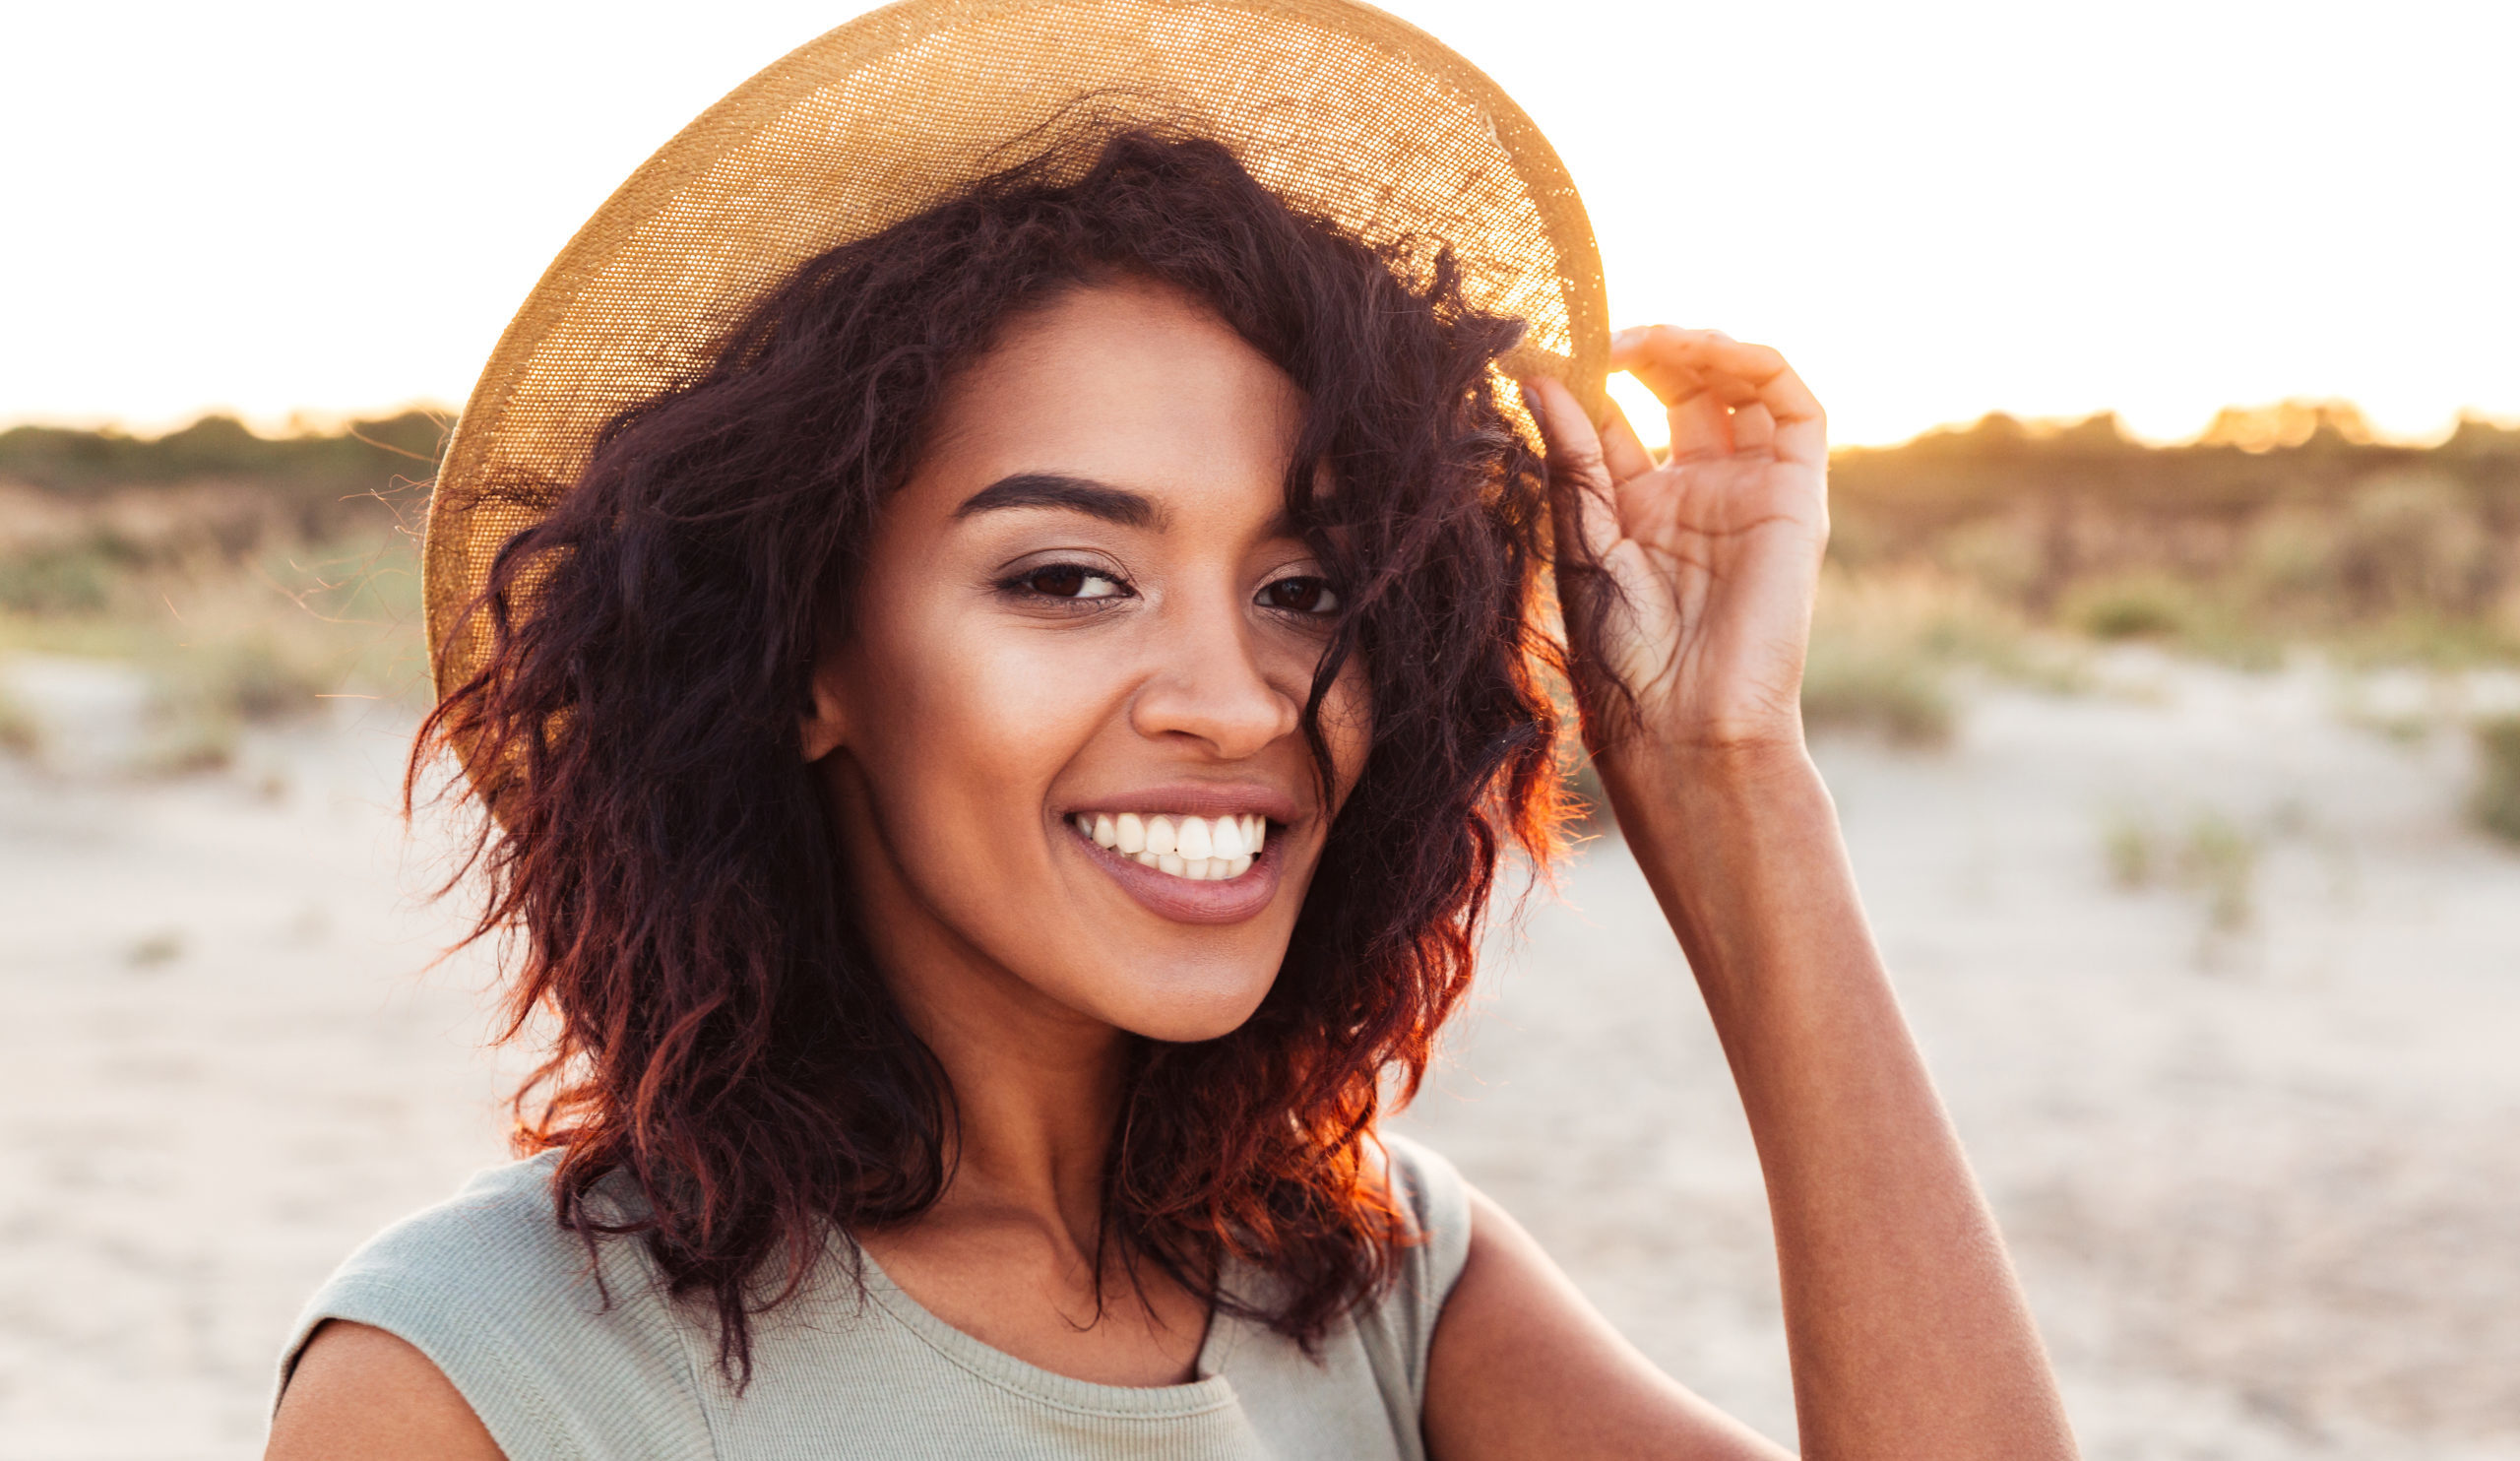 Woman smiling wearing a sun hat